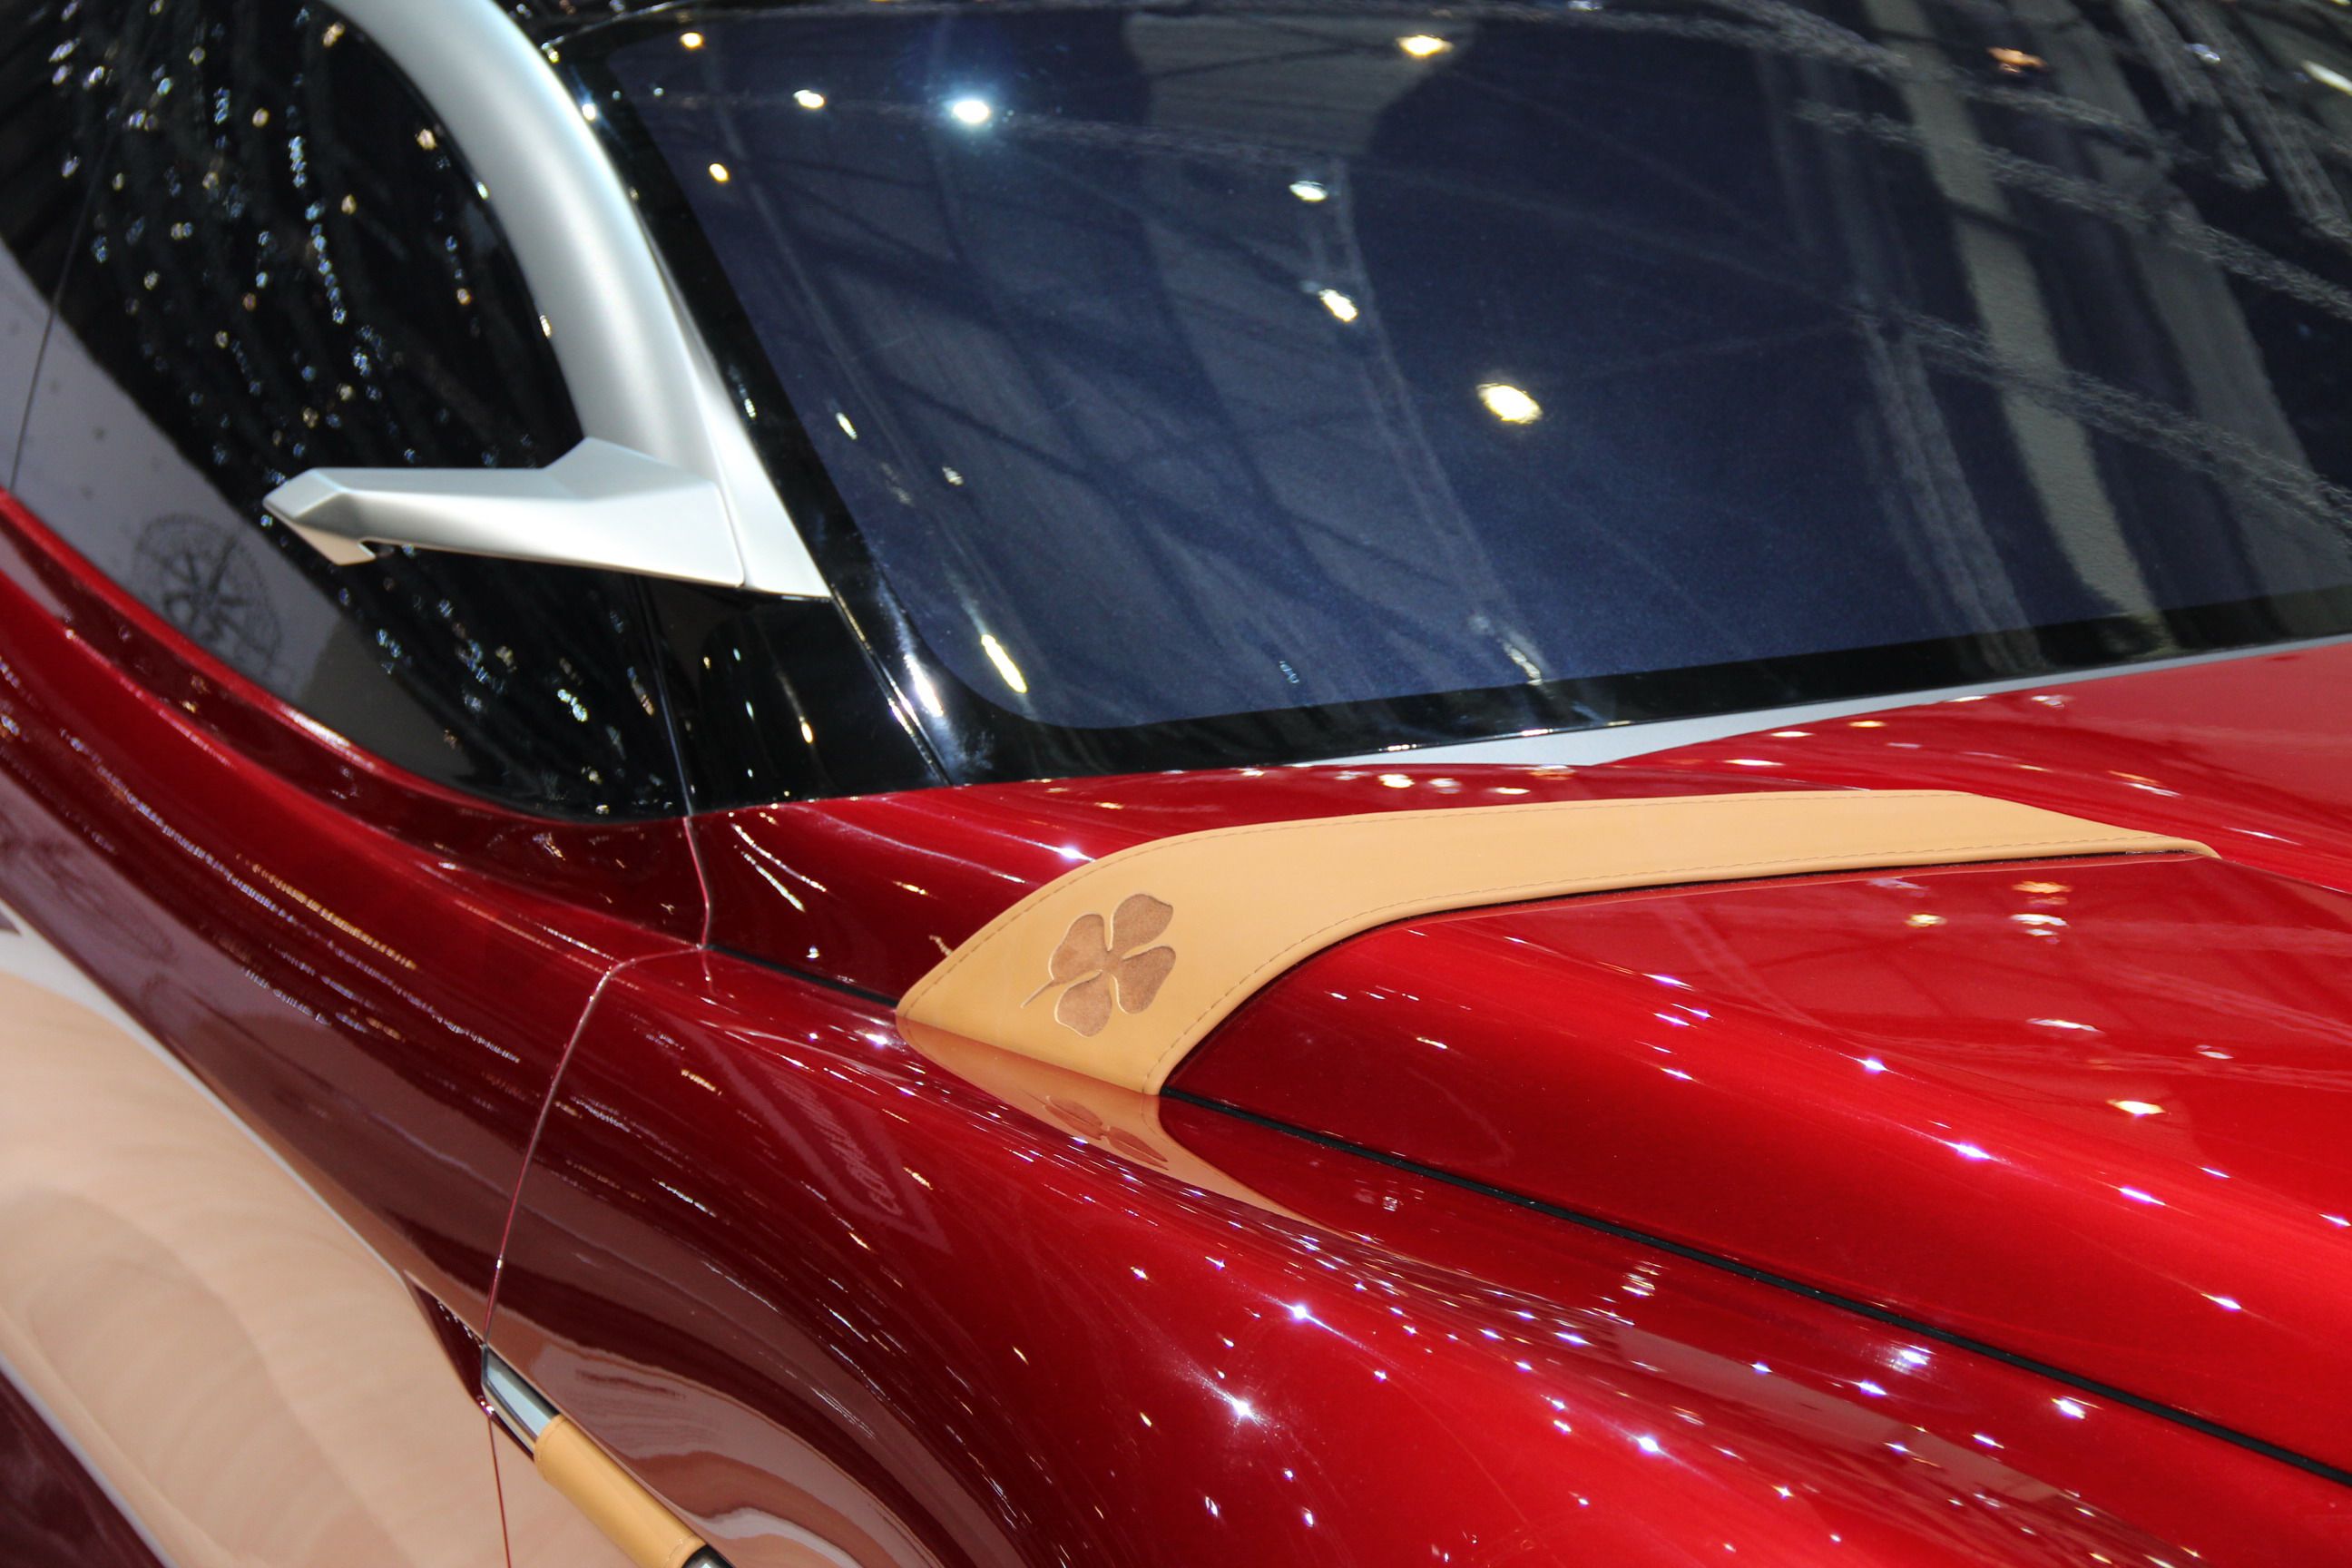 2013 Alfa Romeo Gloria Concept by IED